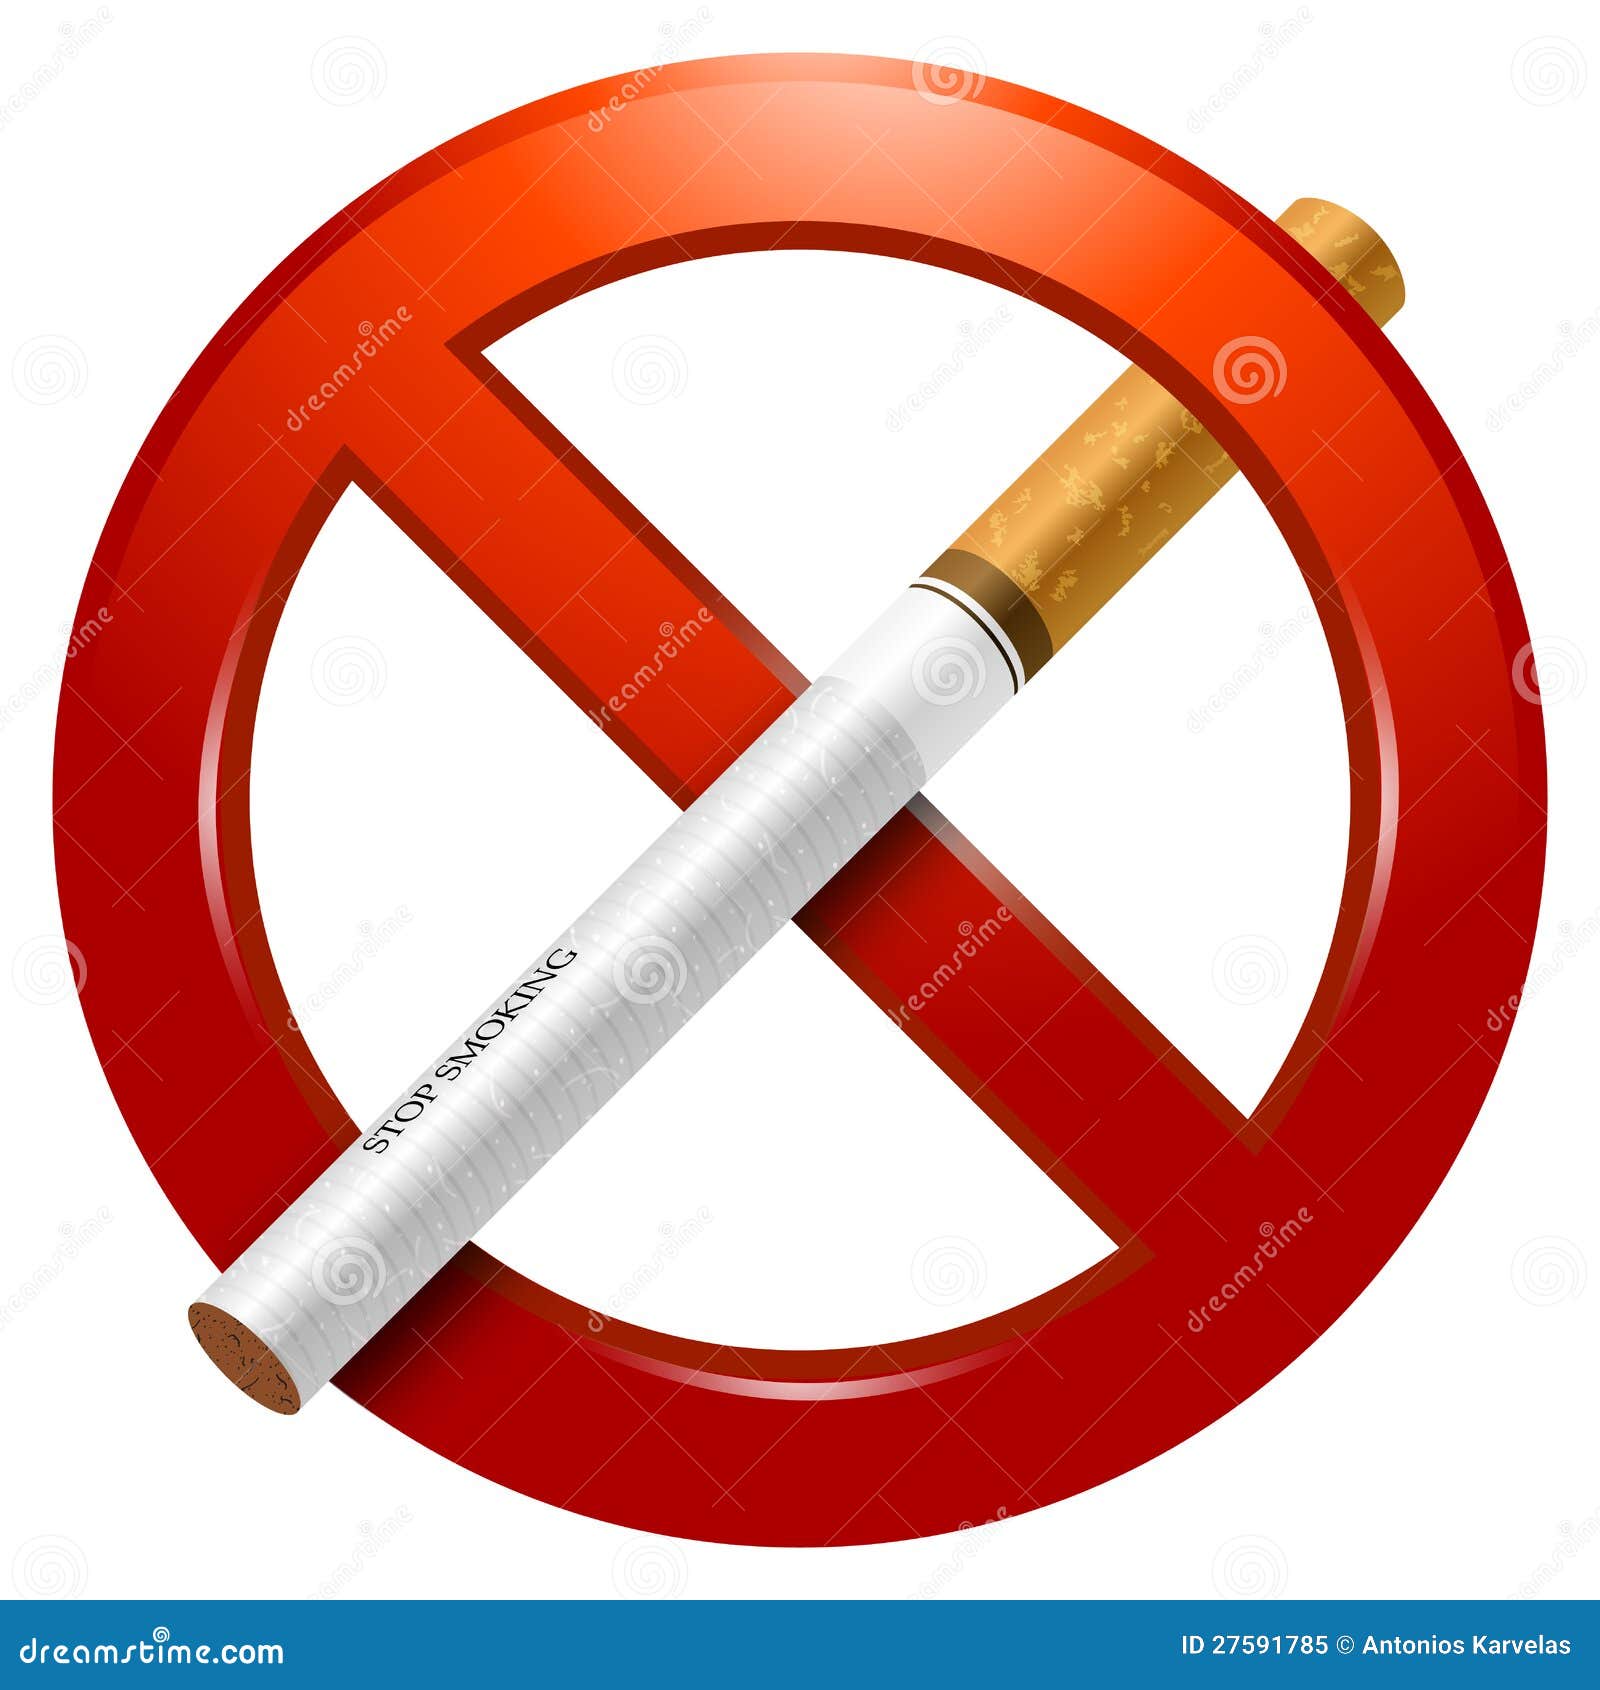 No Smoking Sign stock vector. Illustration of damage - 27591785